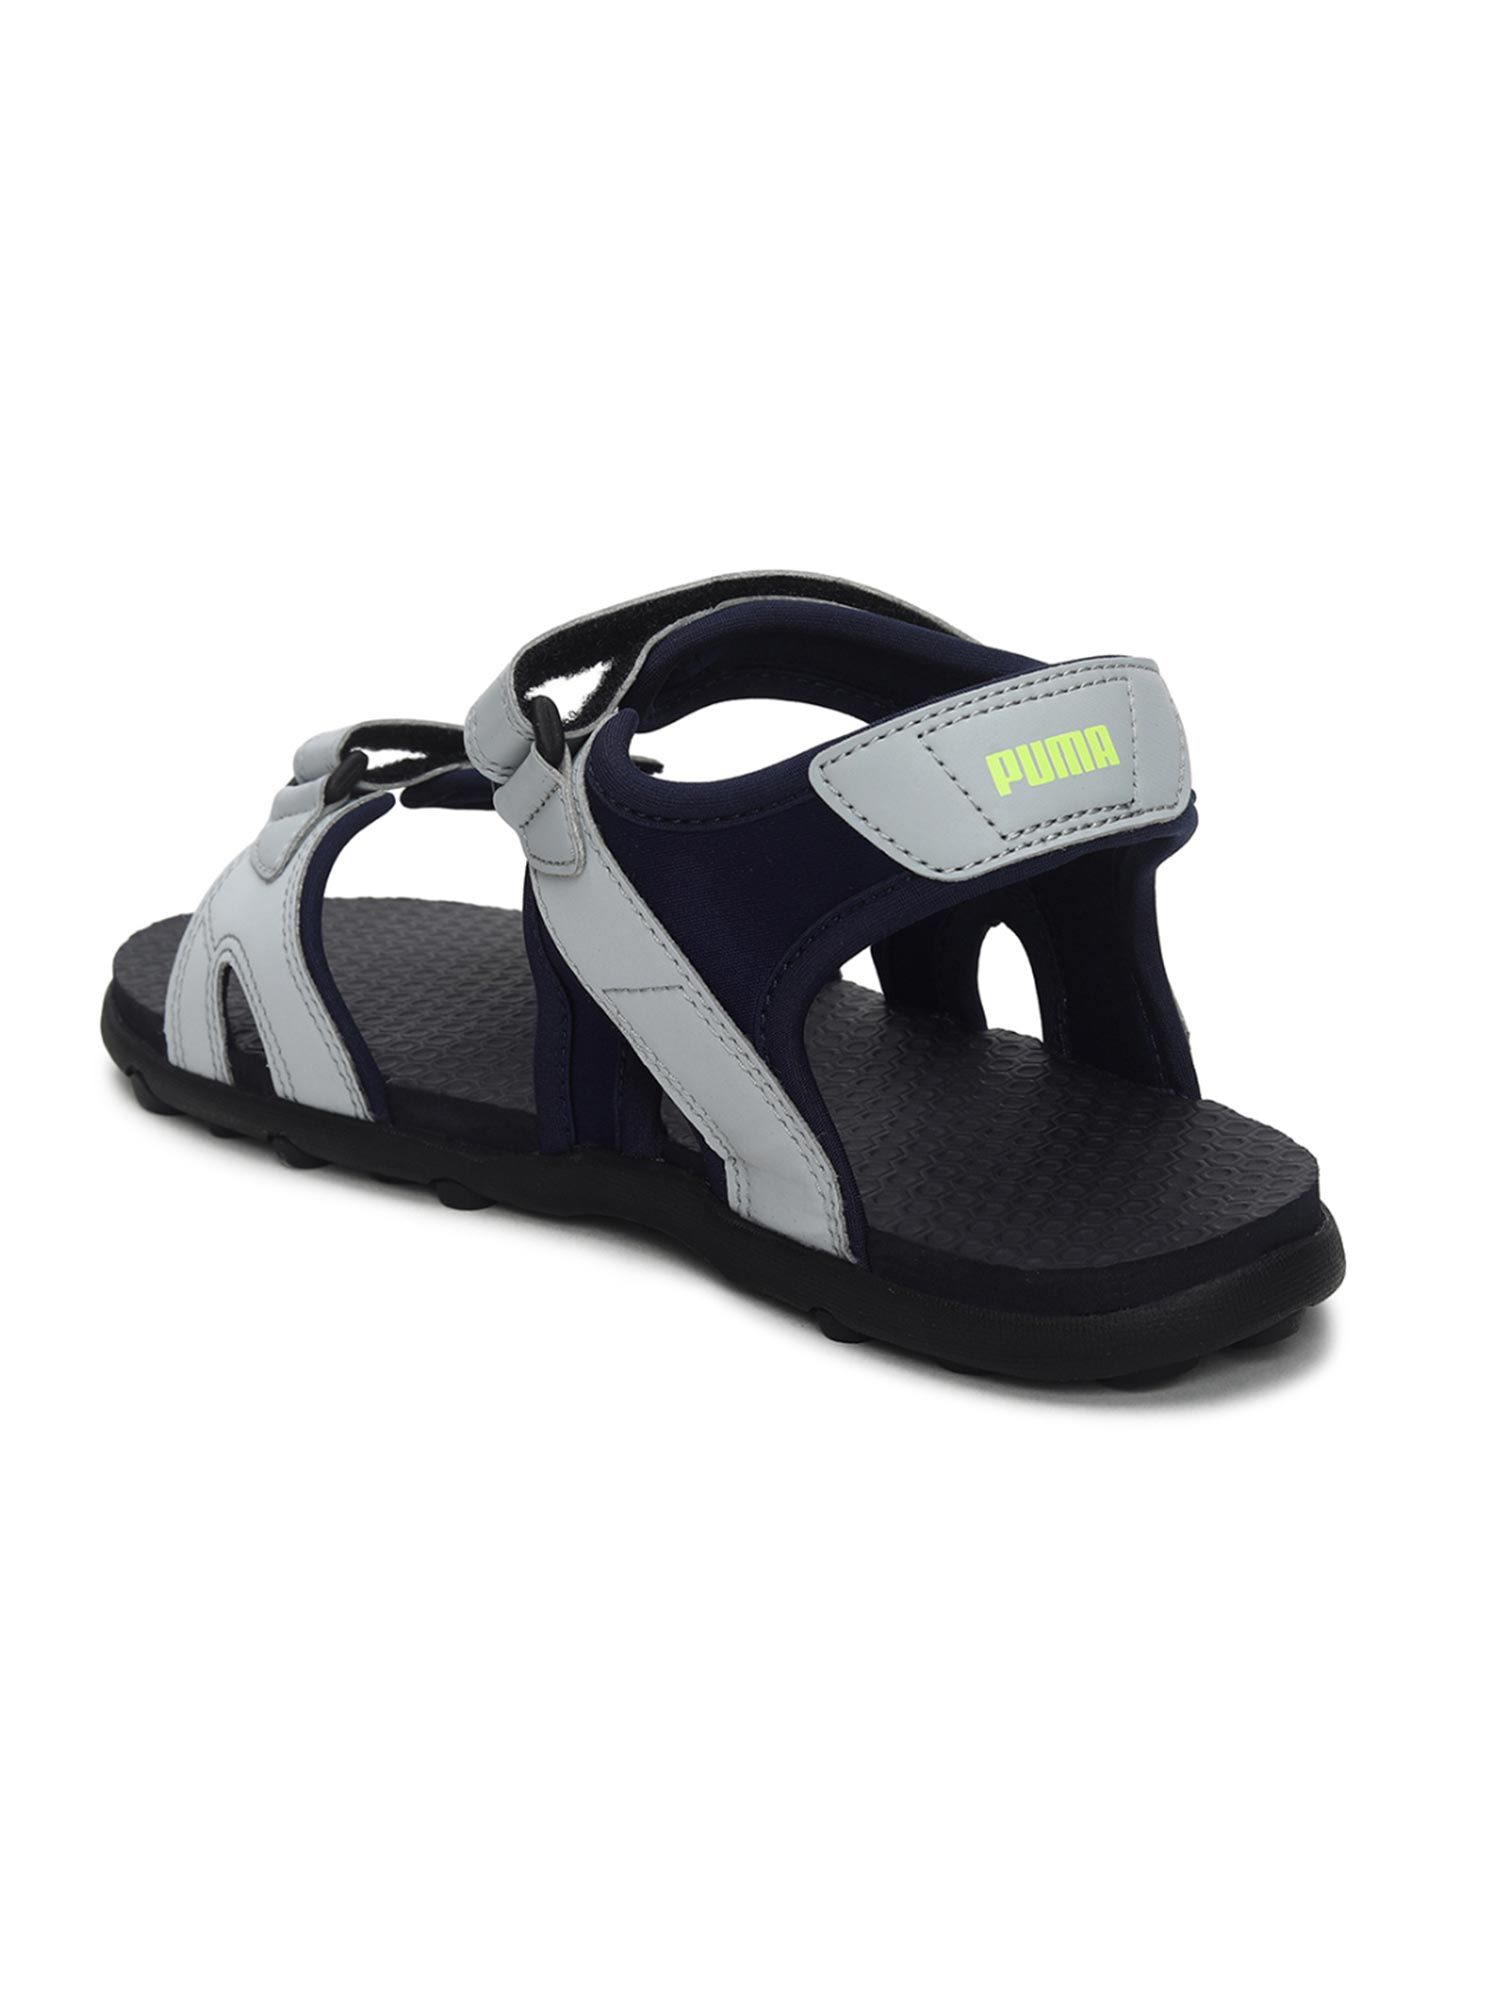 SPARX Sandals For Men - SS 624-Grey